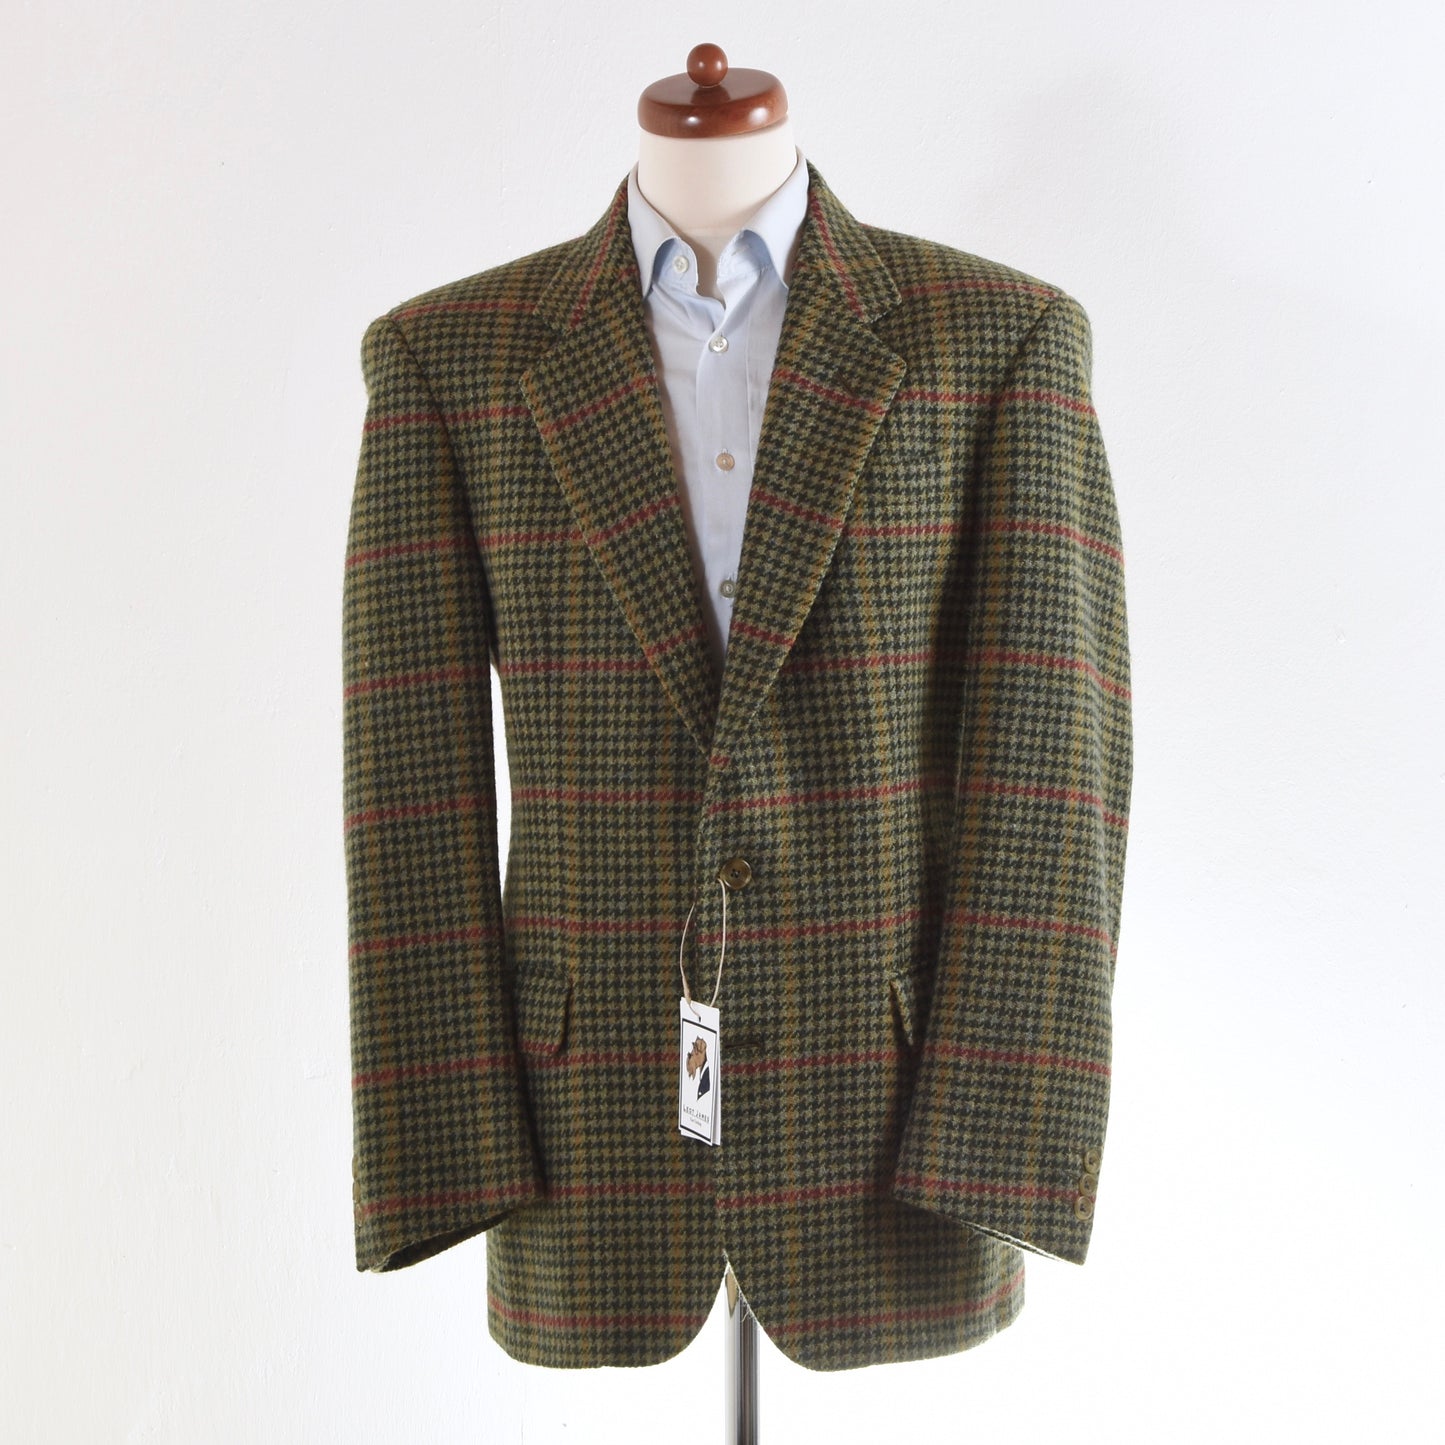 DAKS Tweed Jacket Size 58 - Green Houndstooth